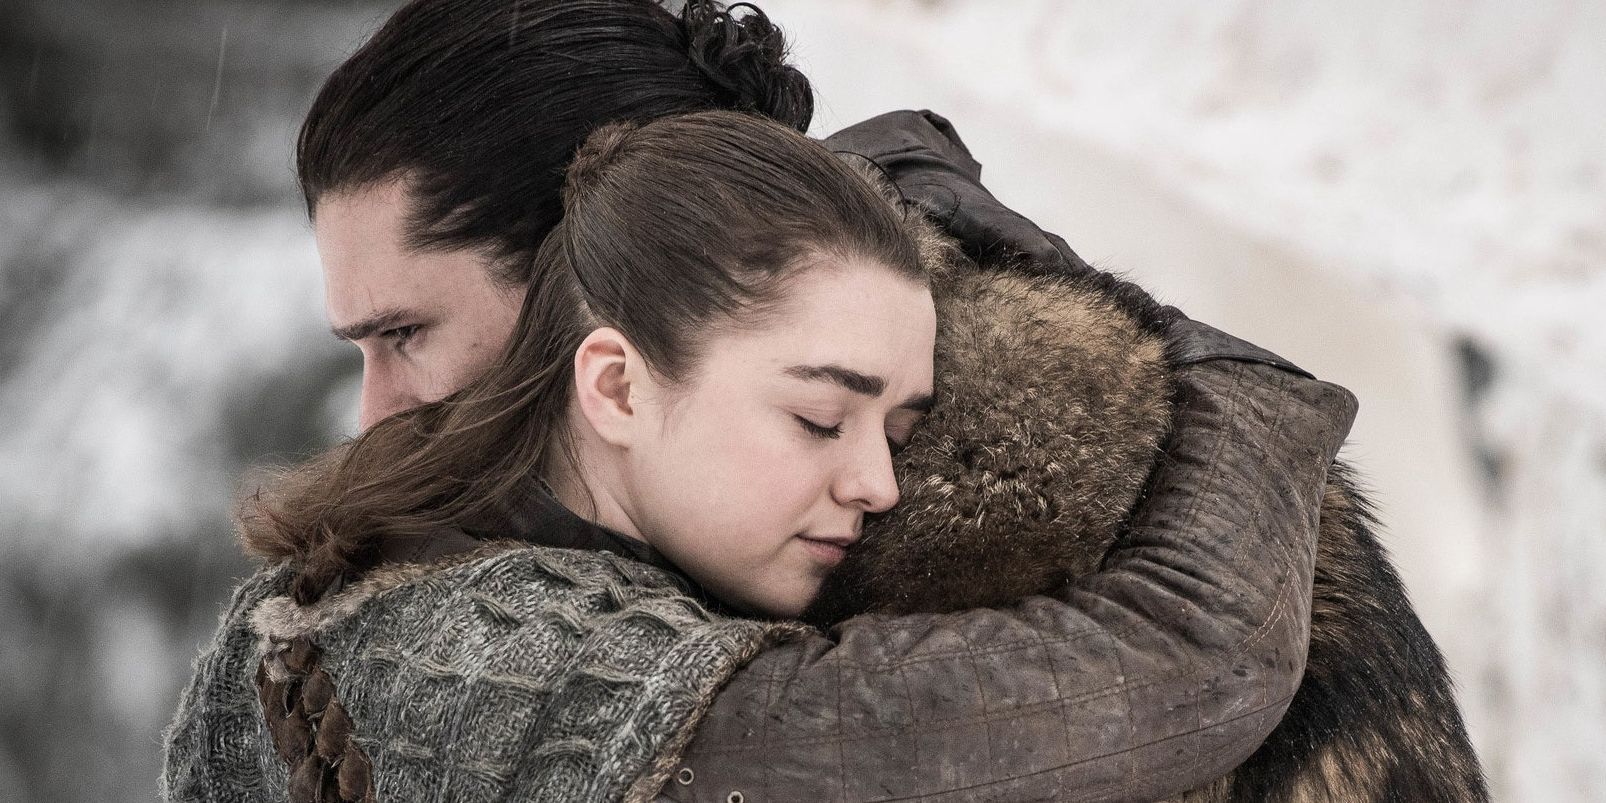 Arya hugging Jon on a snowy field in Game of Thrones.